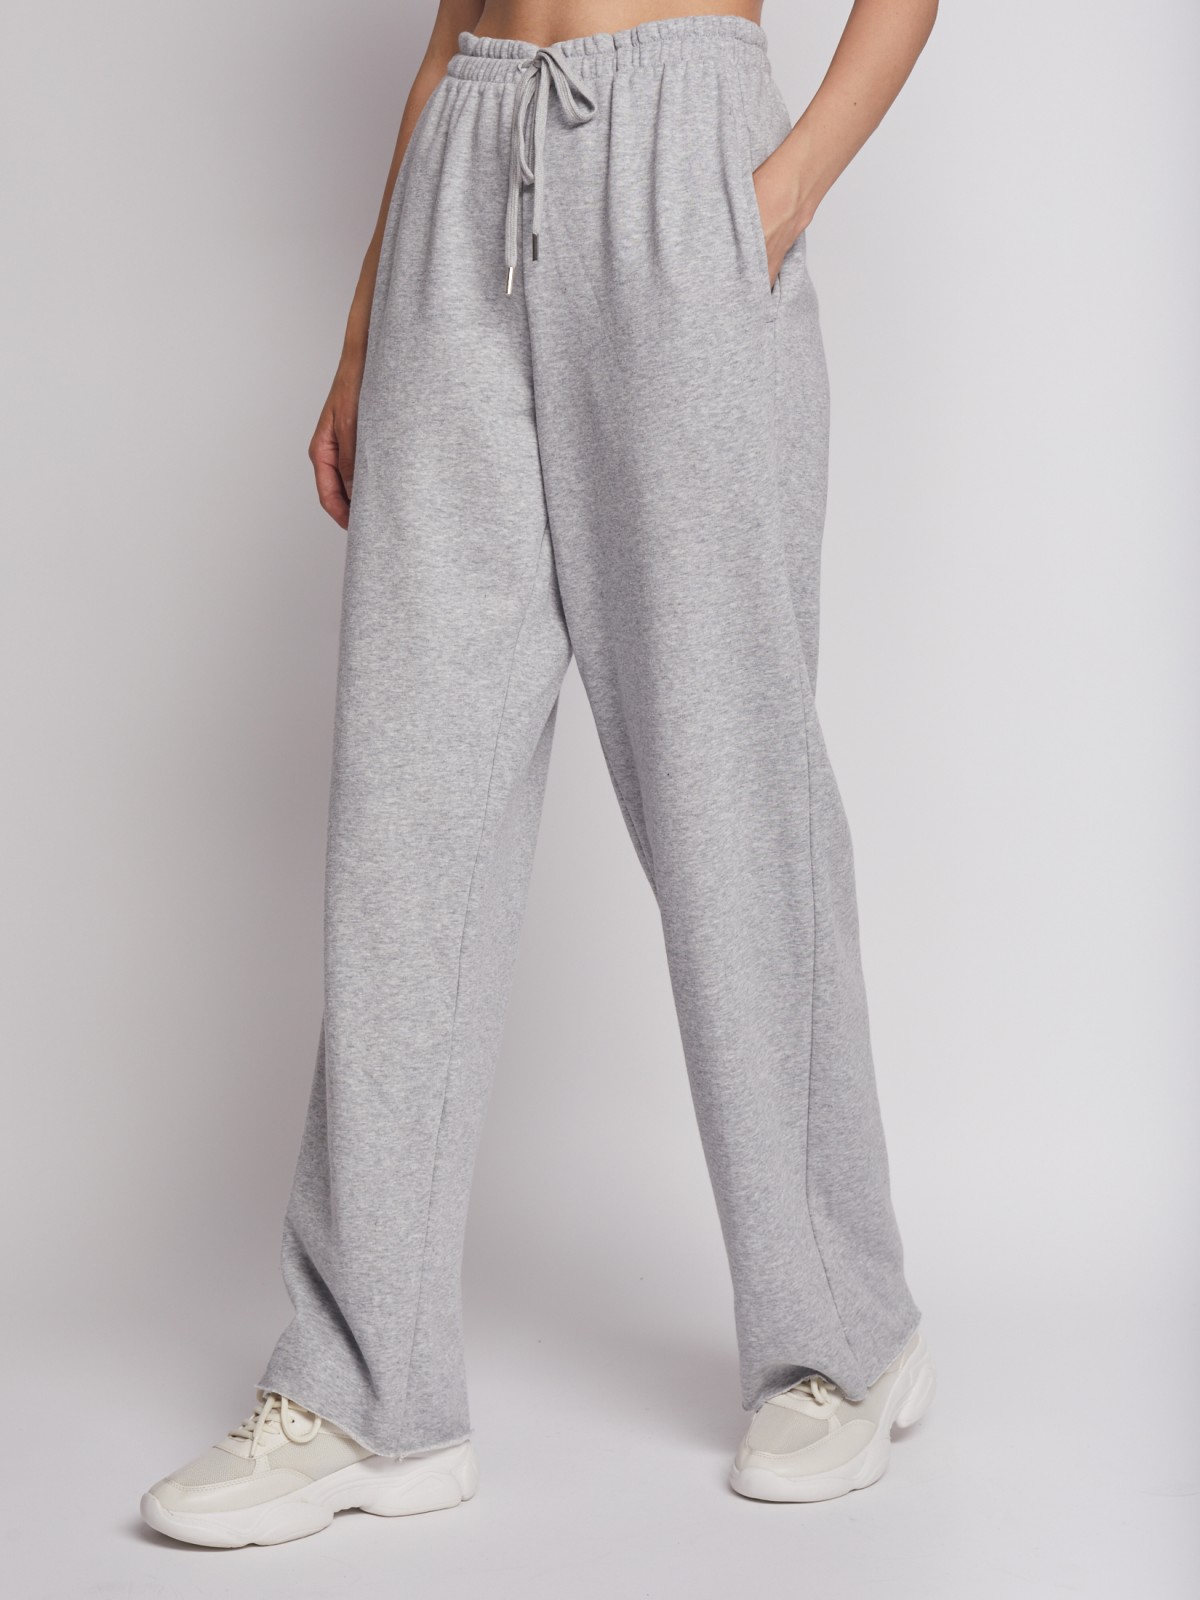 Трикотажные брюки прямого силуэта zolla 22232762L013, цвет серый, размер XS - фото 3